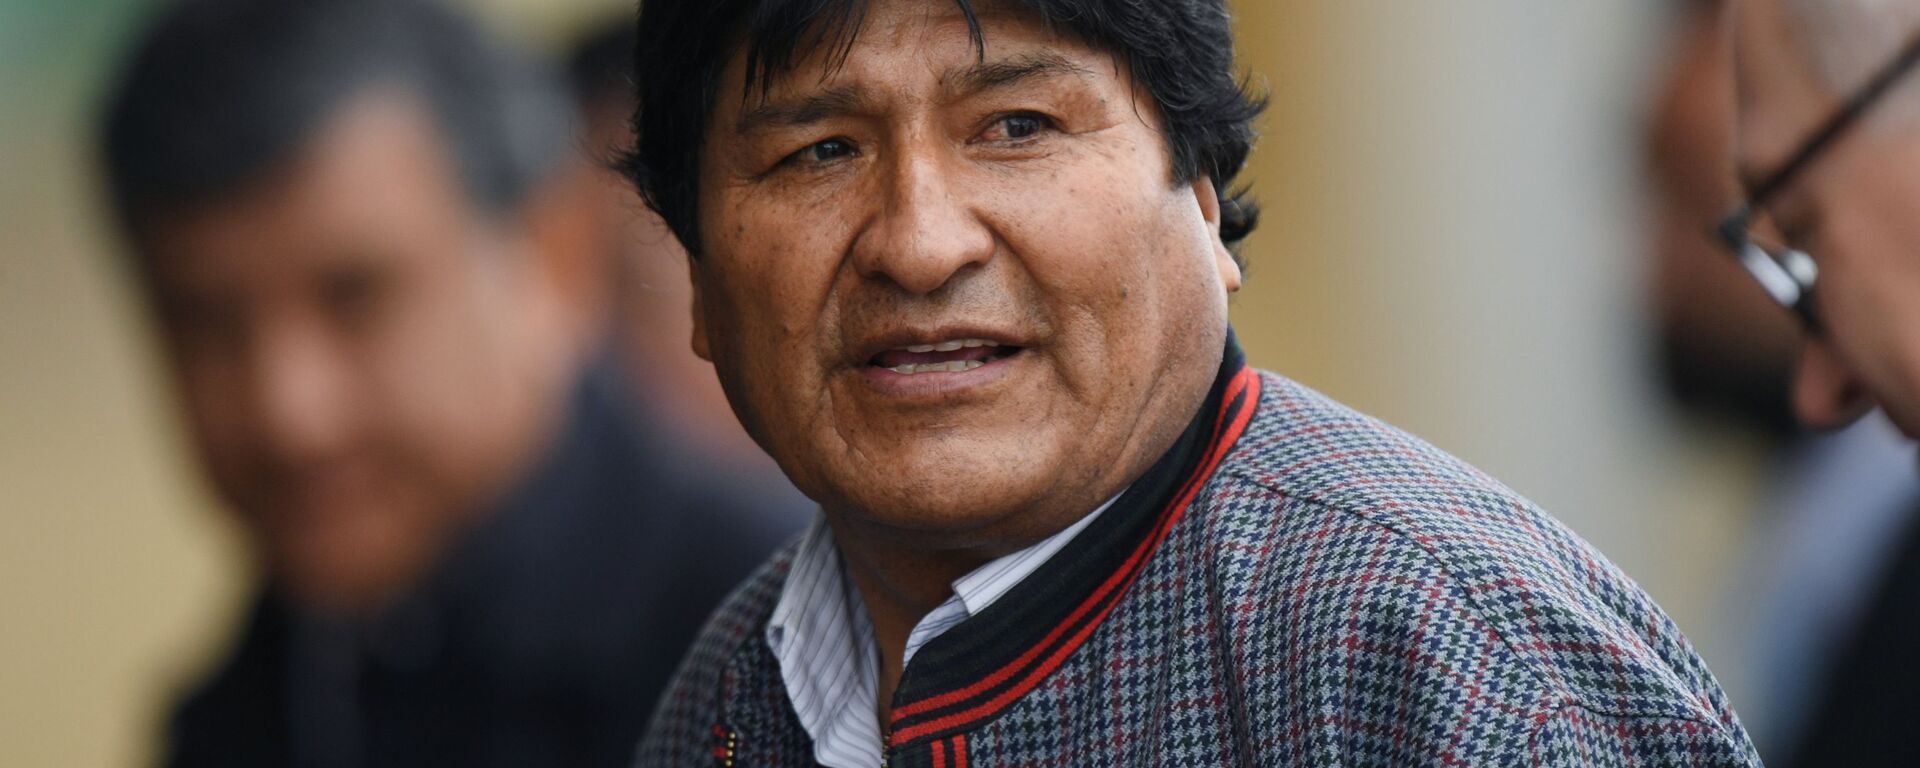 Evo Morales, presidente boliviano  - Sputnik Mundo, 1920, 17.09.2021